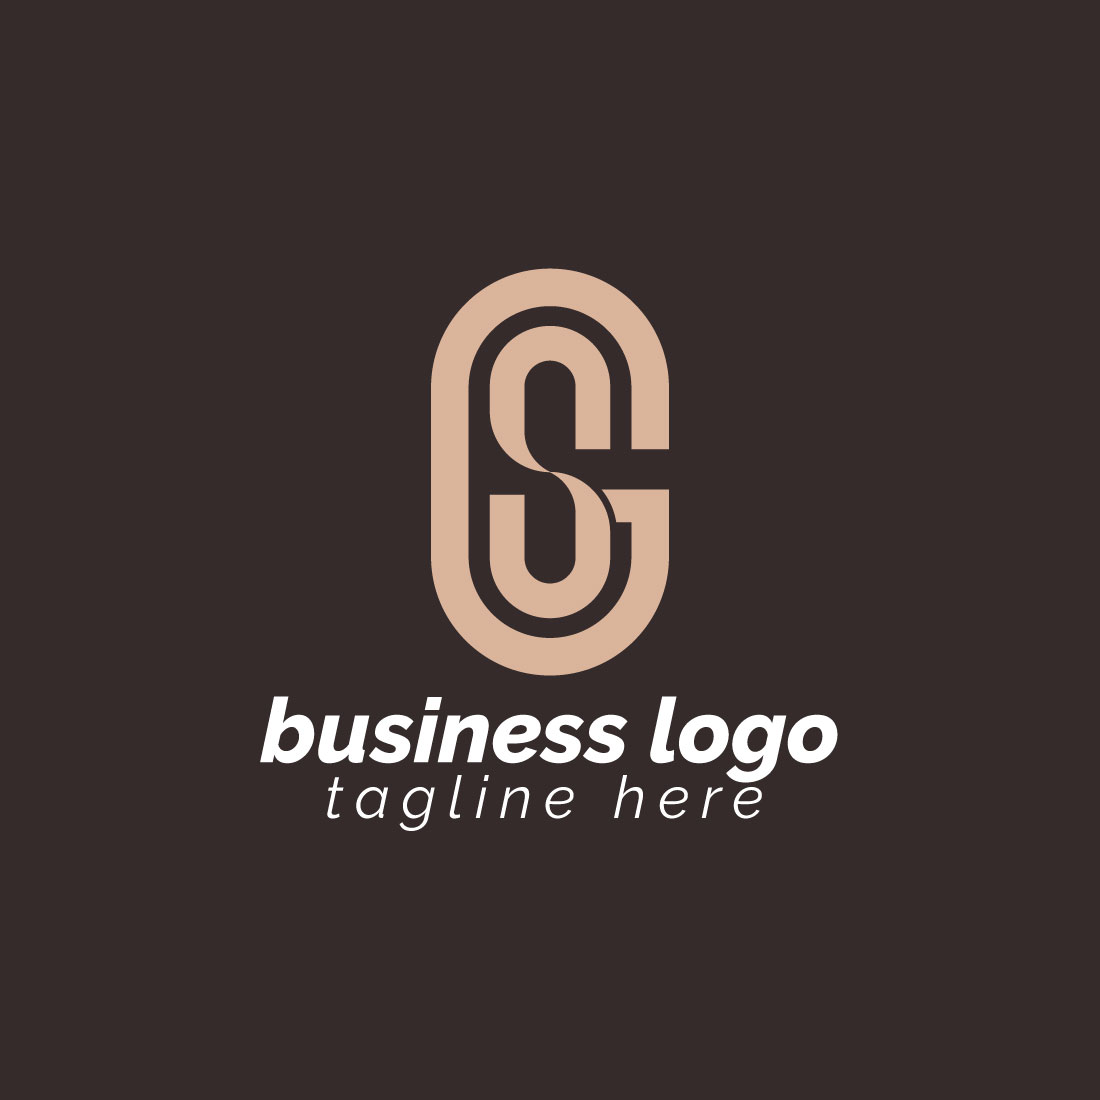 GS Or SG Monogram Logo preview image.